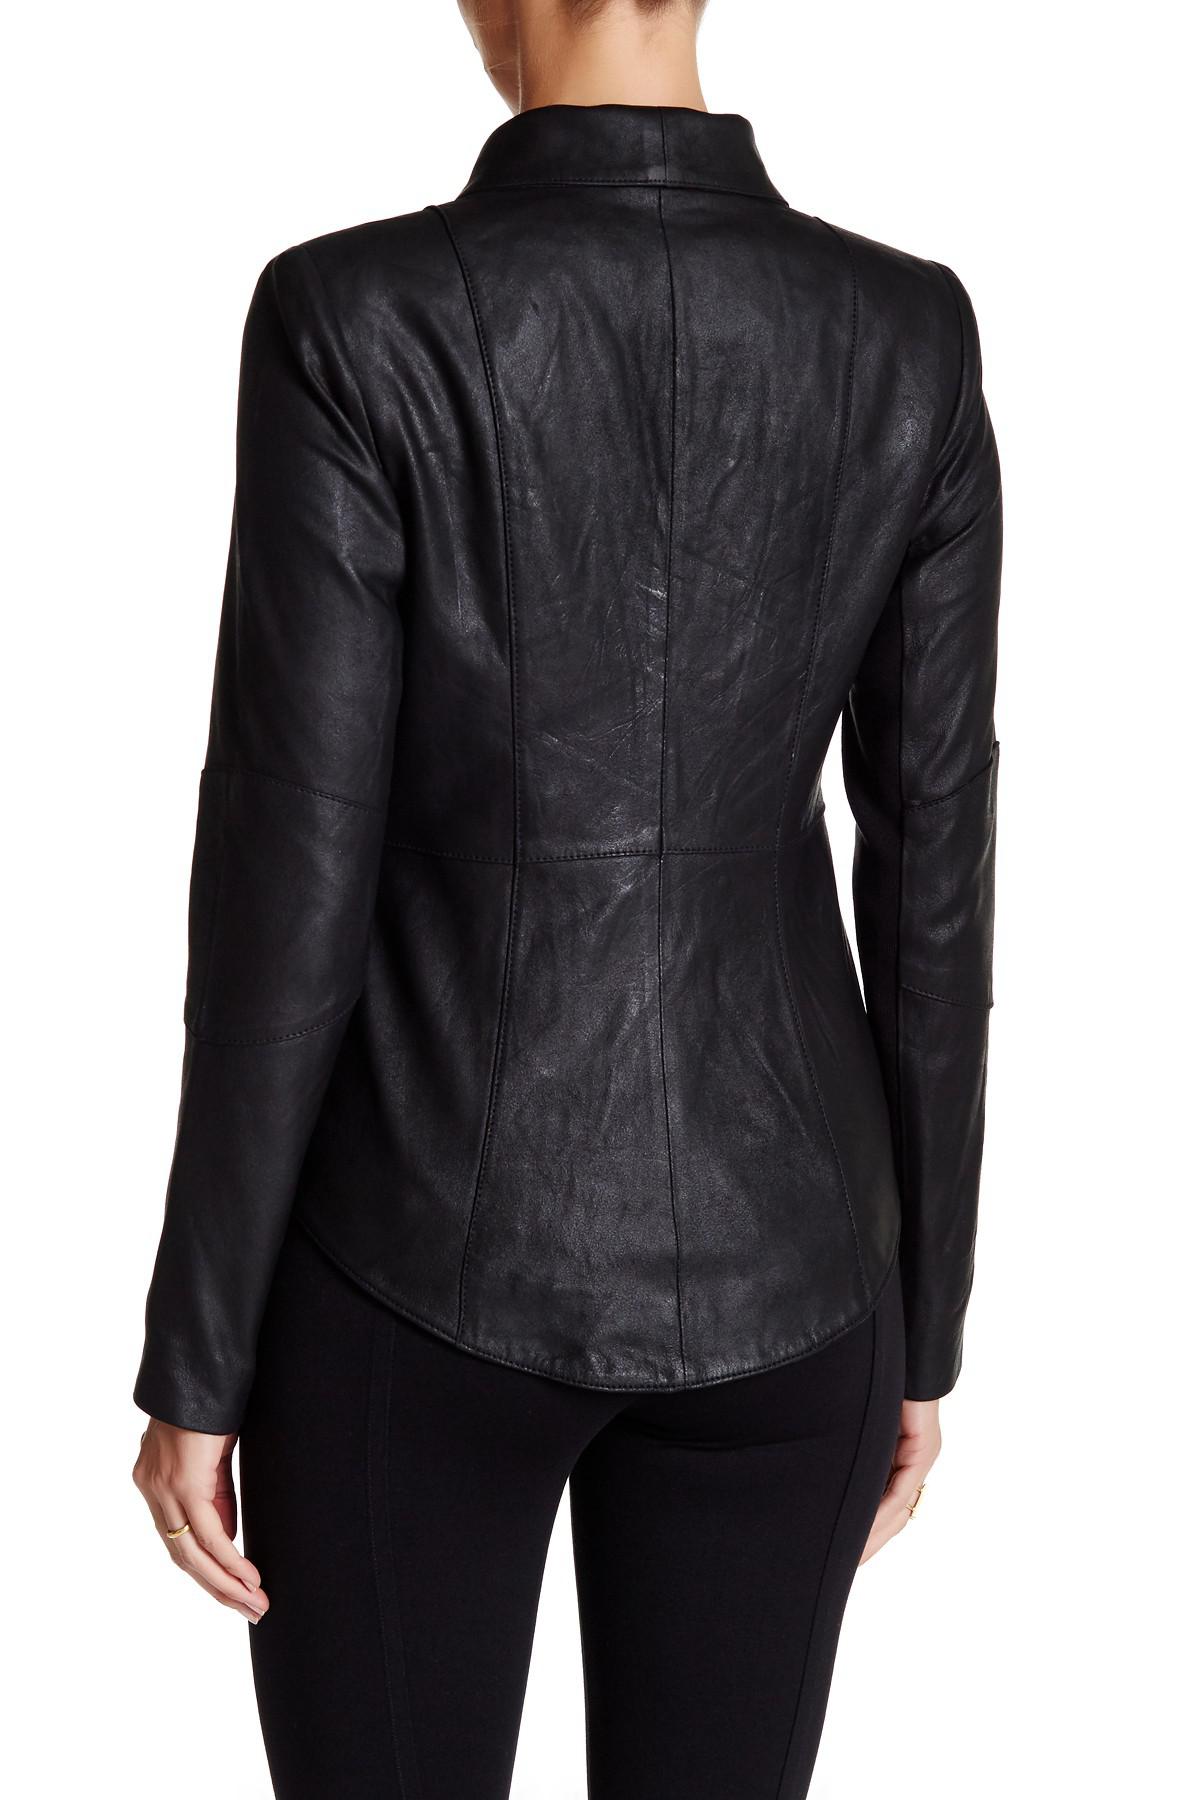 Lyst - Bcbgeneration Genuine Leather Coattail Drape Front Jacket in Black